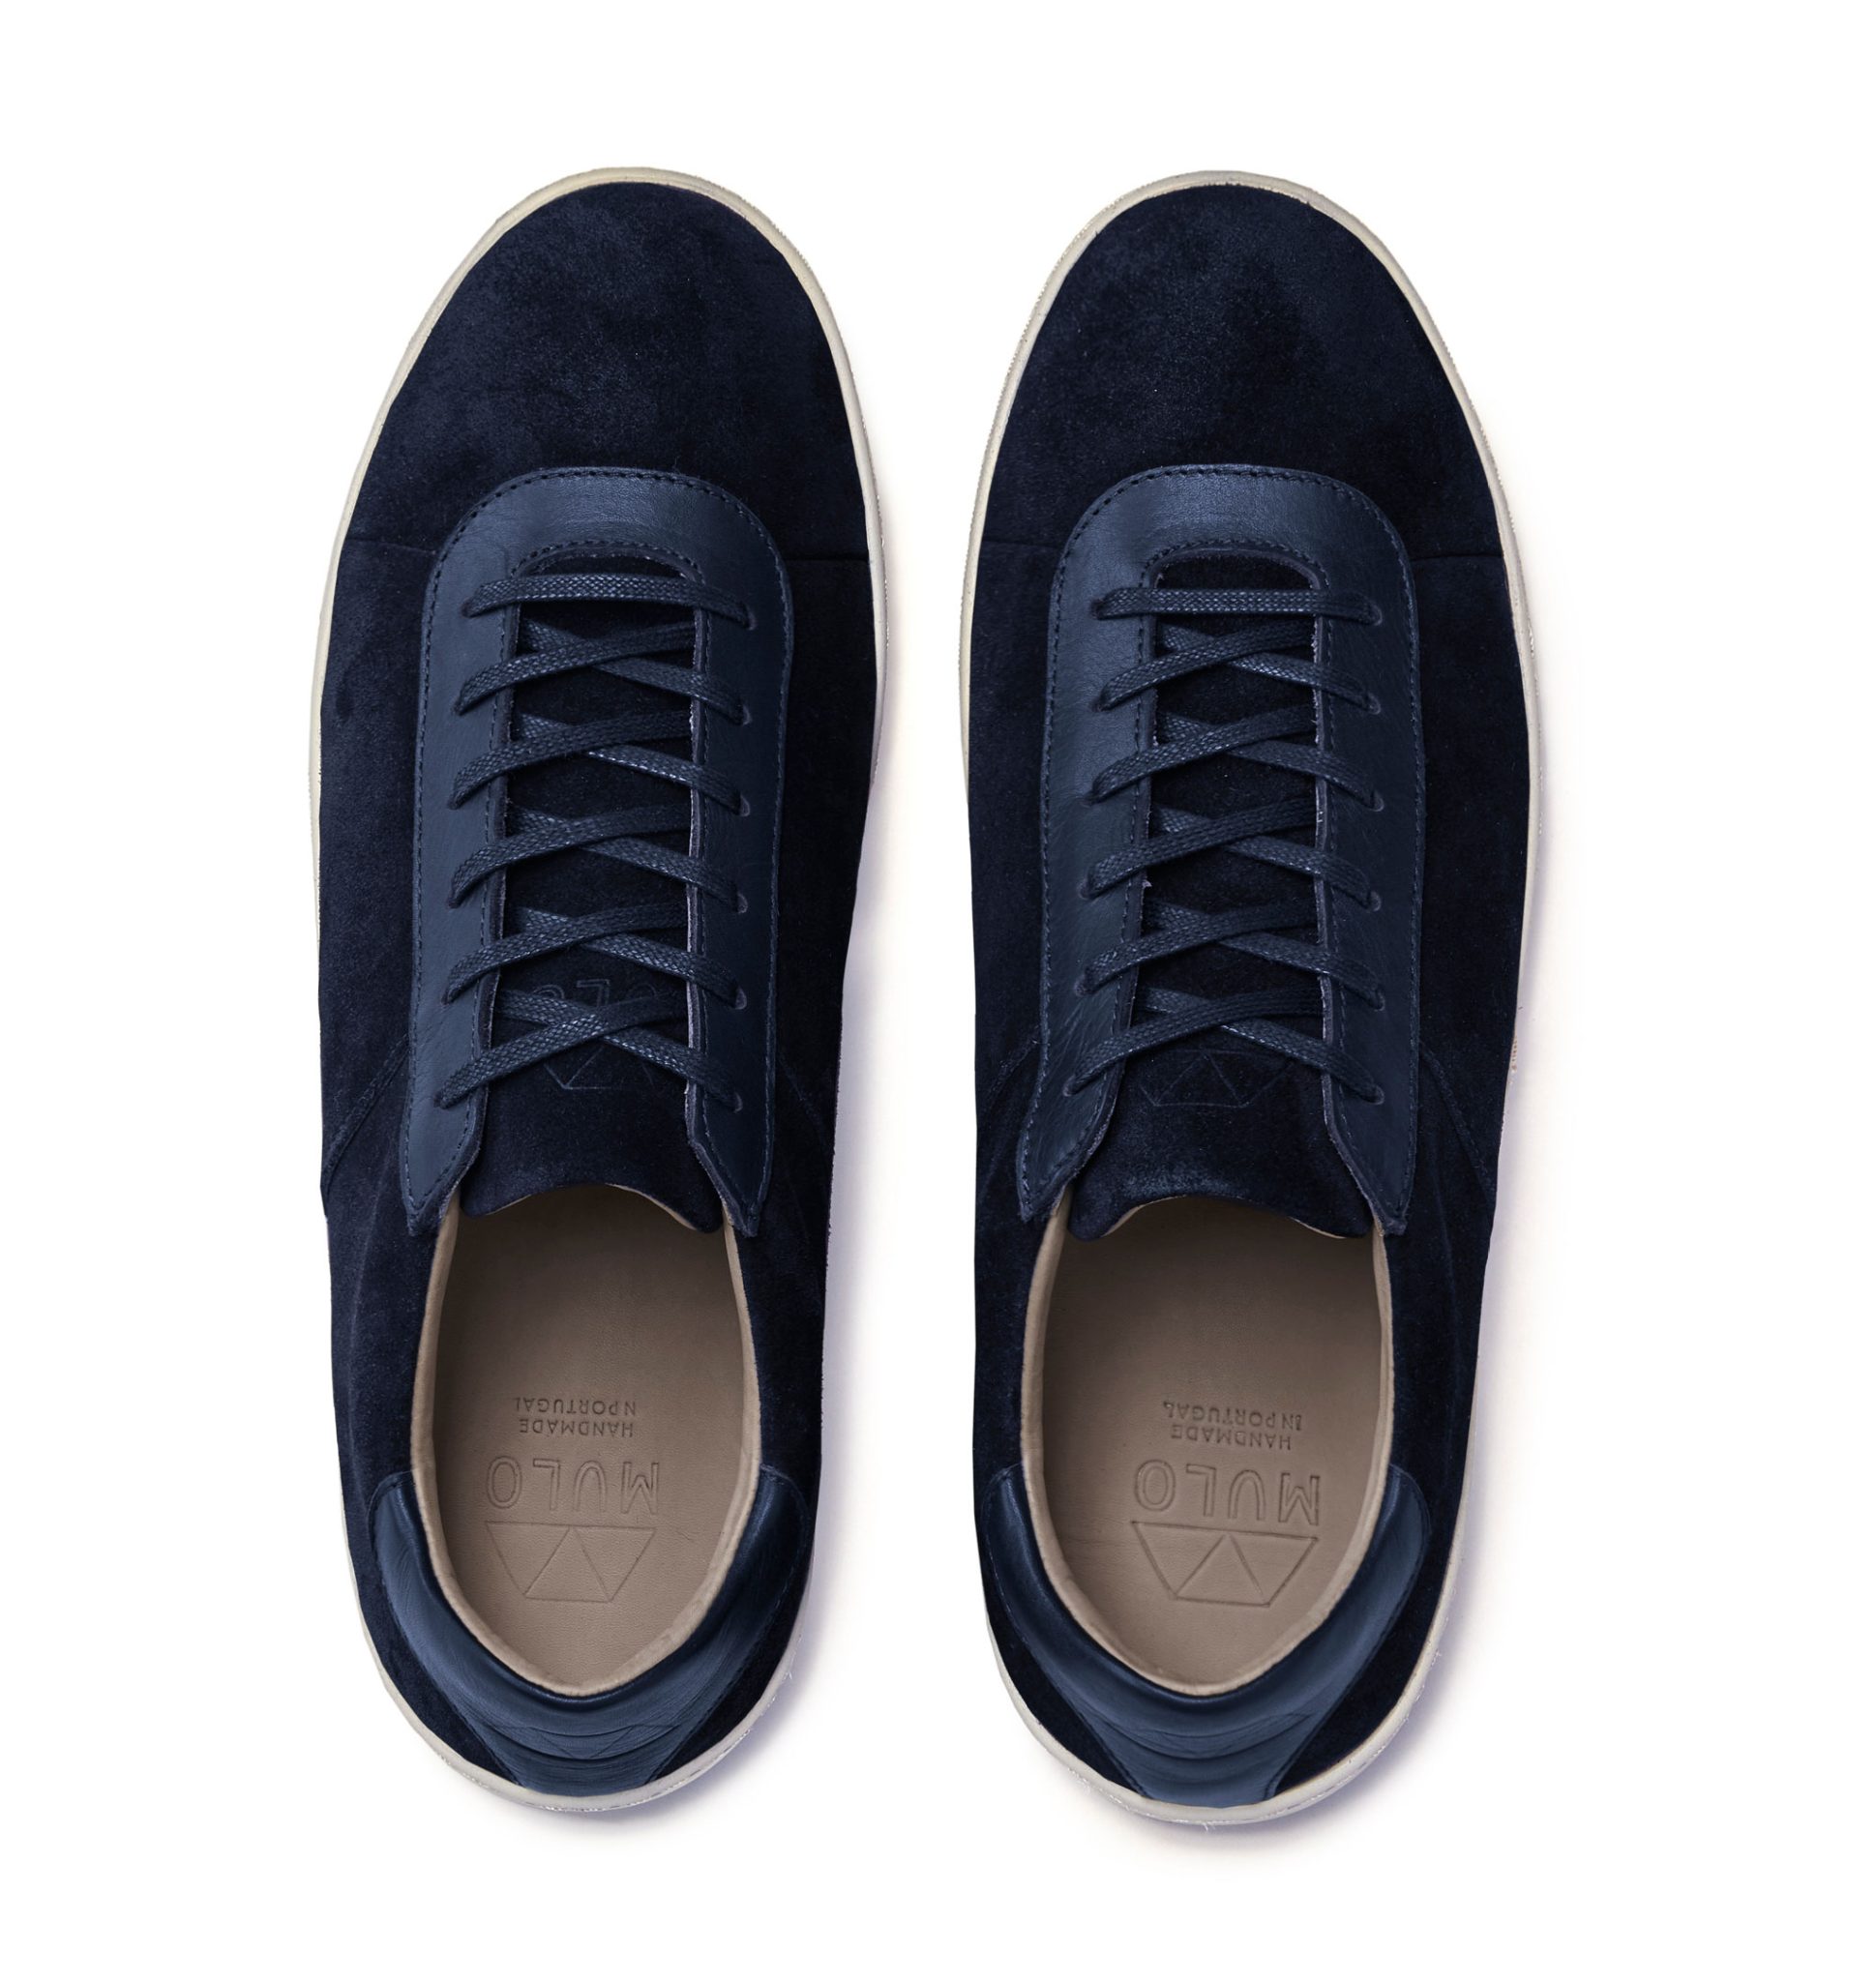 Blue Sneakers for Men in Suede